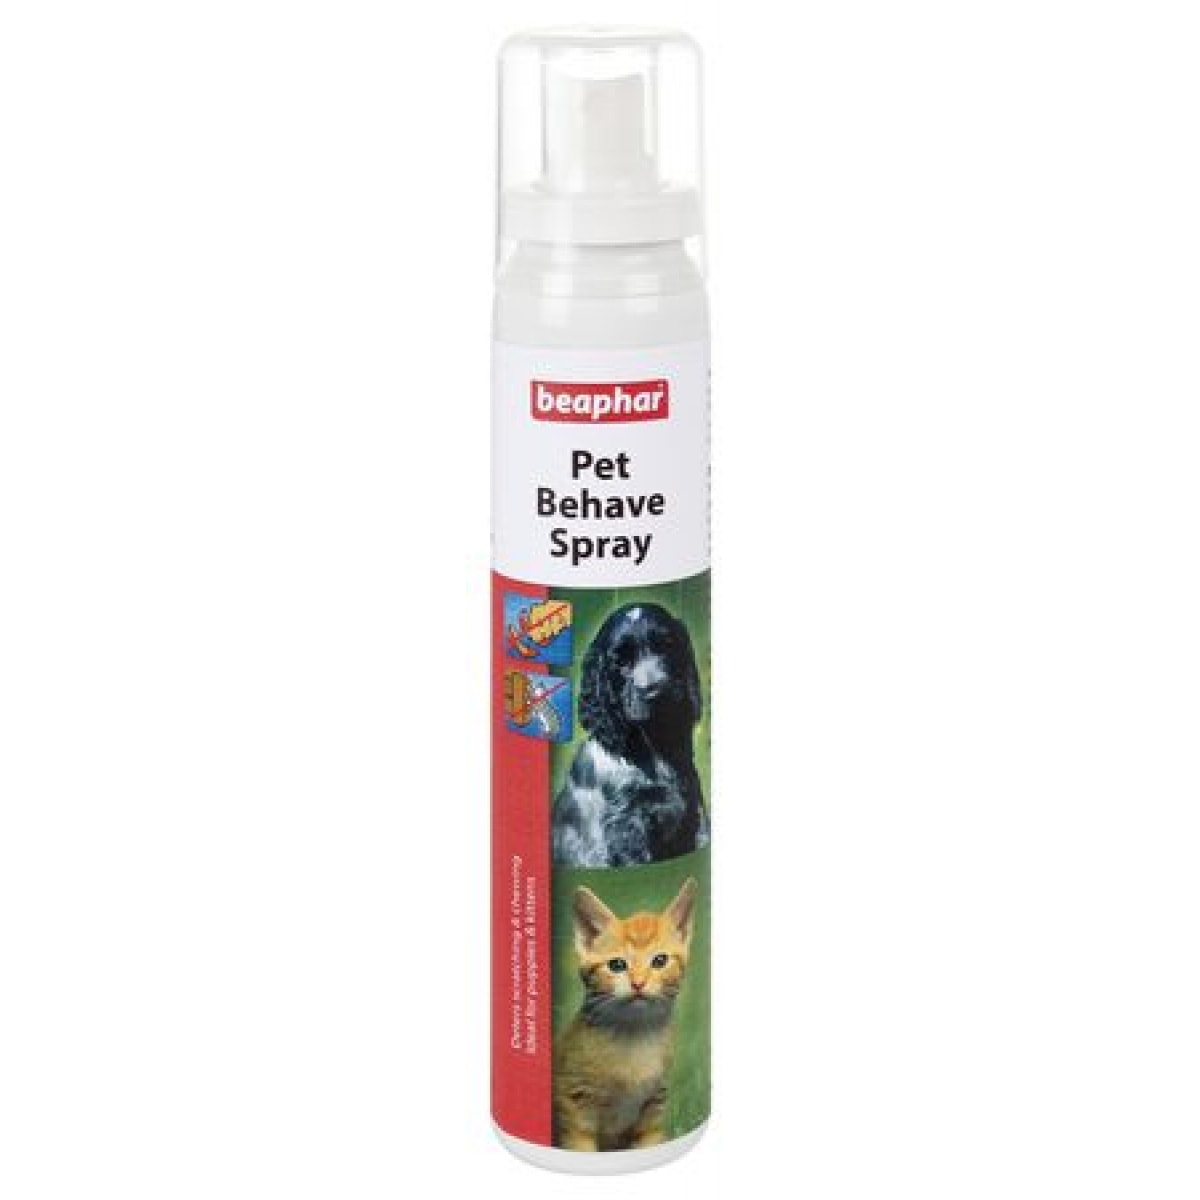 Beaphar Pet Behave Spray – Pawfect Supplies Ltd Product Image